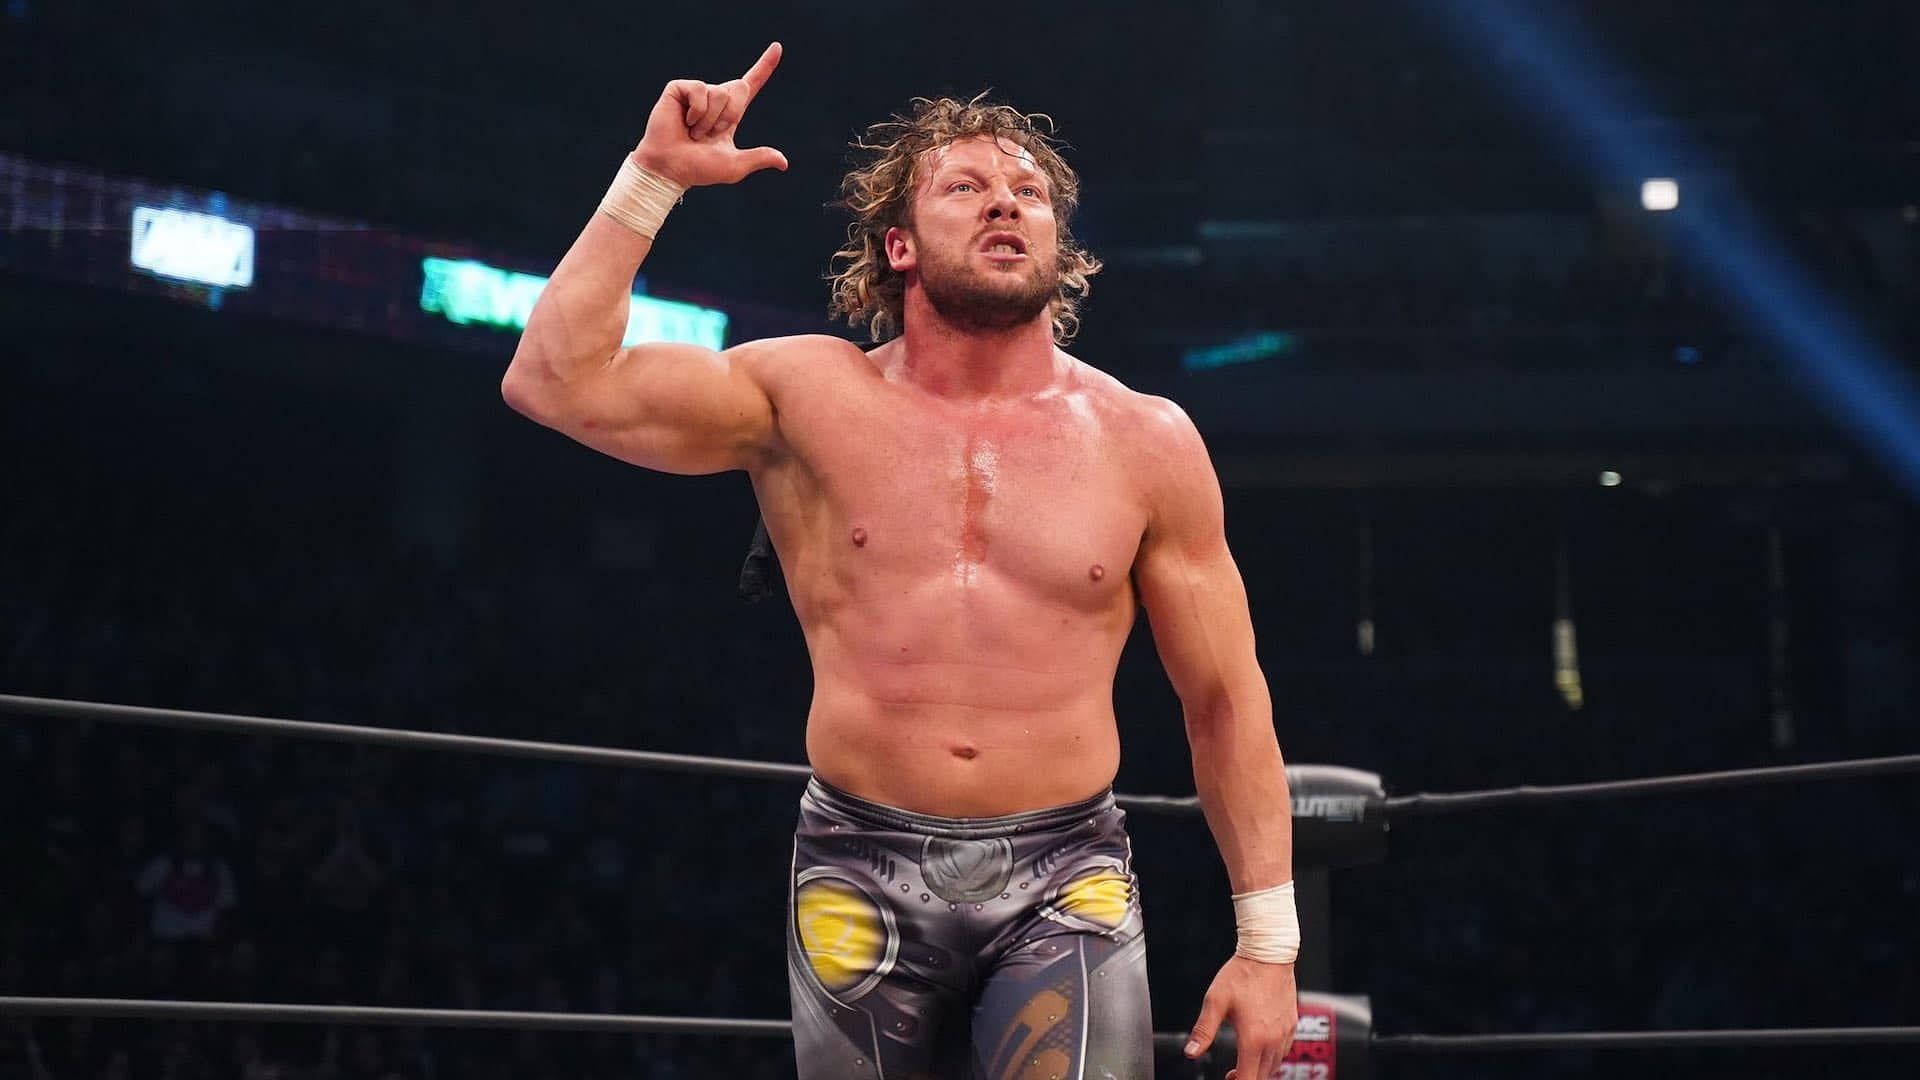 Kenny Omega will return to NJPW in January